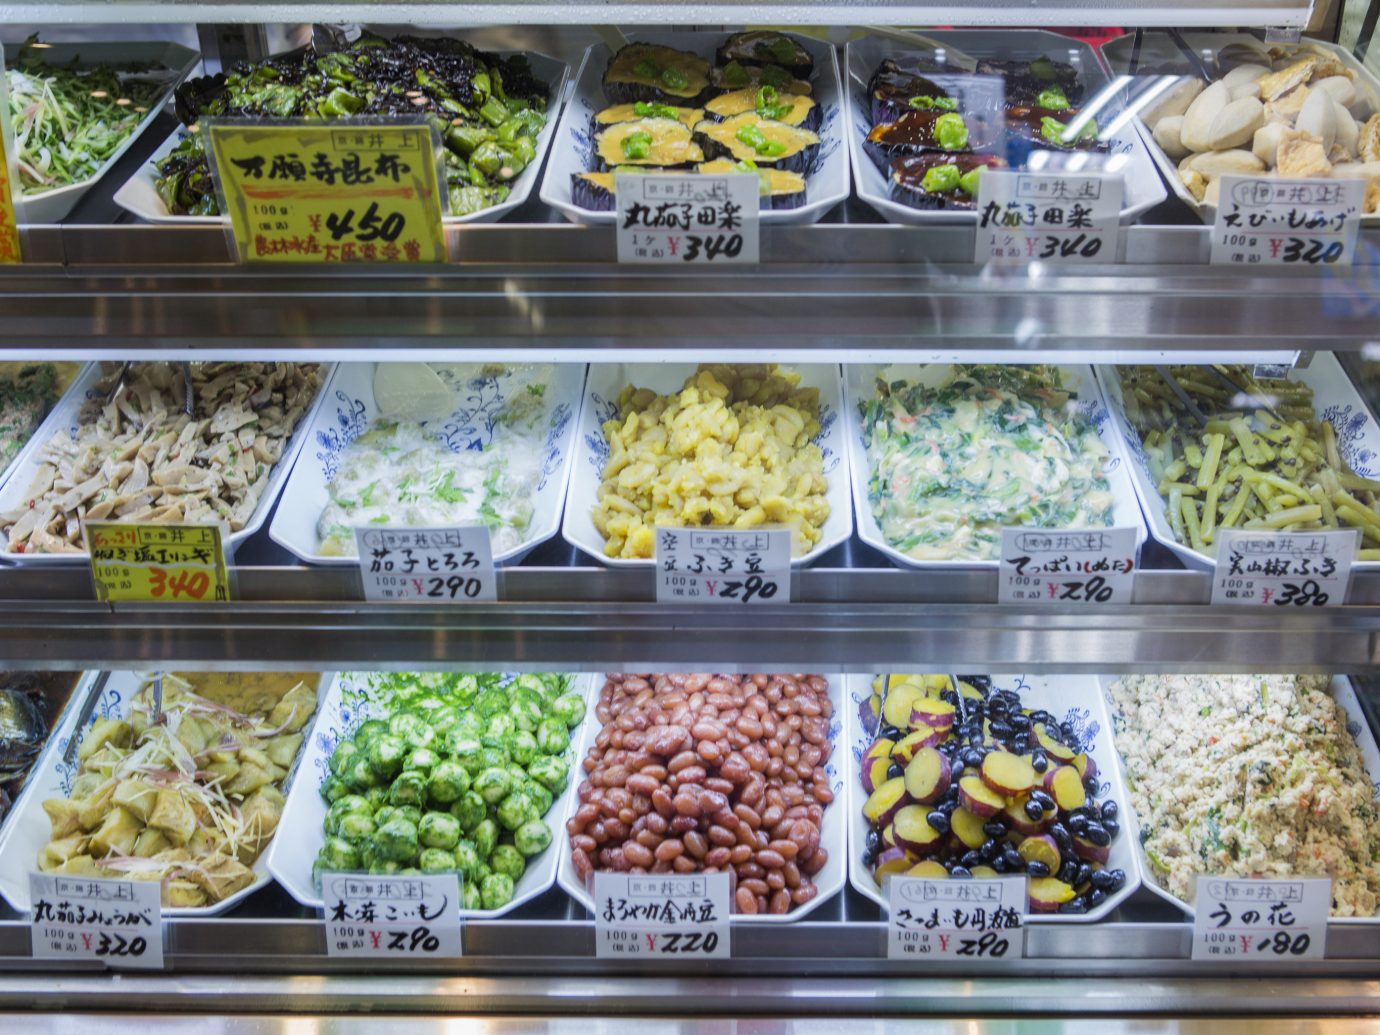 Beauty Health + Wellness Japan Kyoto San Francisco Travel Tips food produce whole food bunch cuisine vegetable several